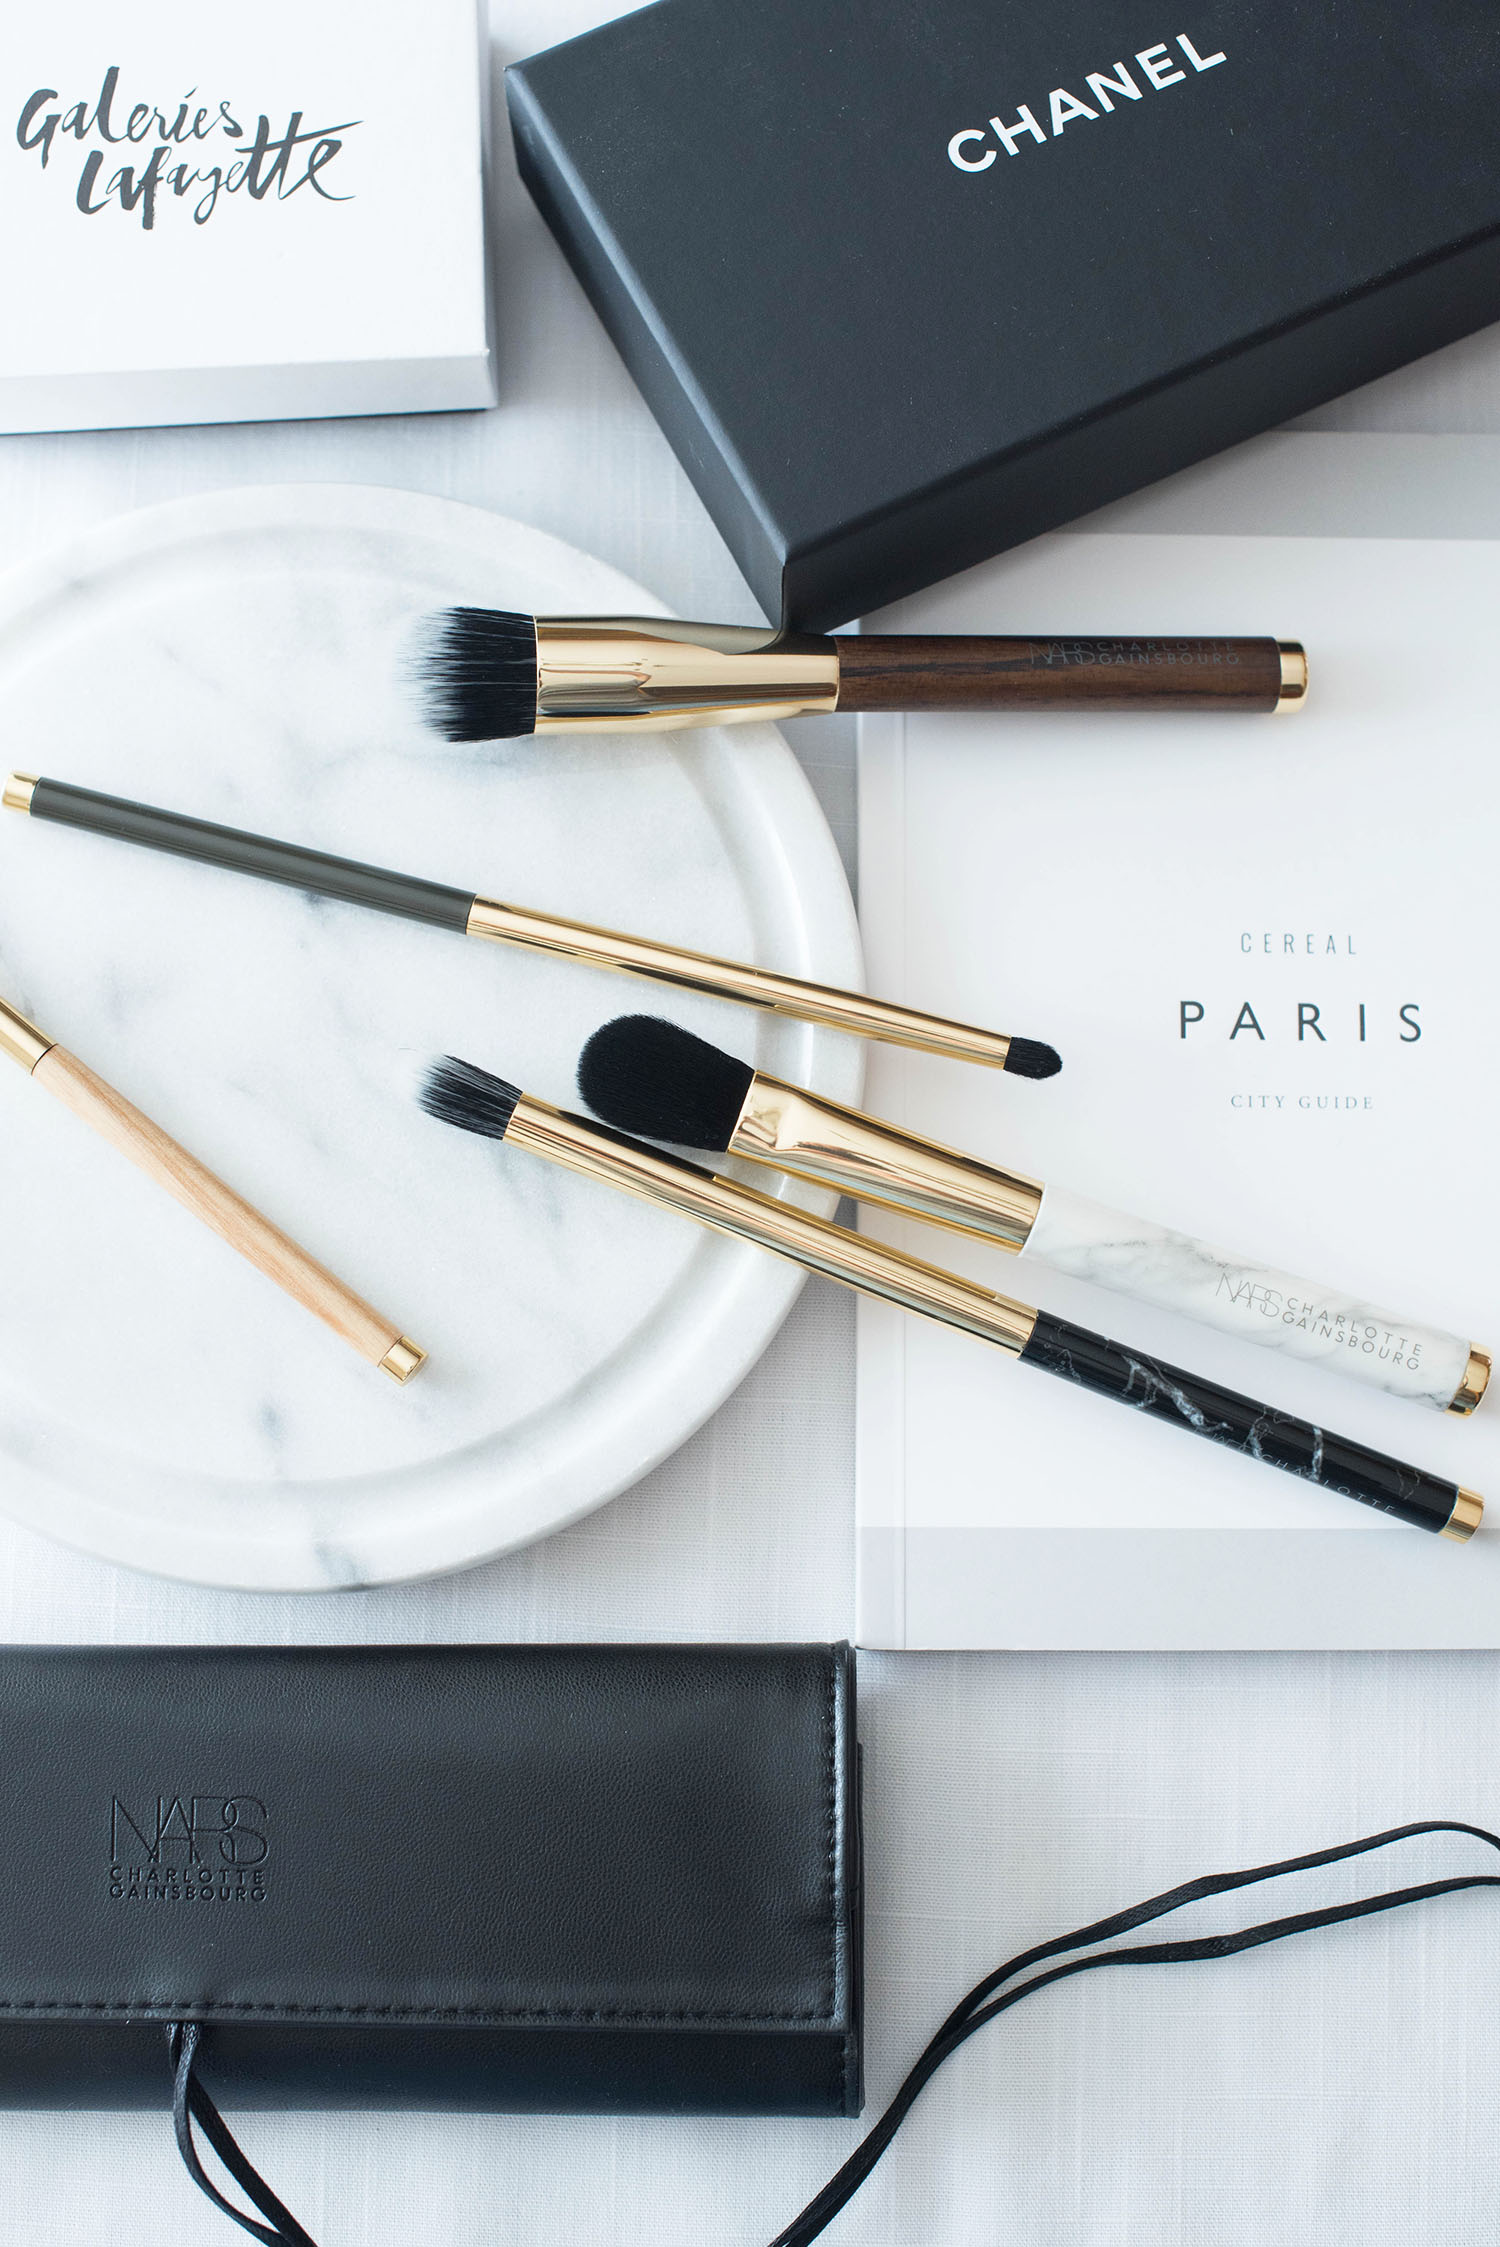 Nars x Charlotte Gainsbourg make-up brush set captured by beauty blogger Cee Fardoe of Coco & Vera